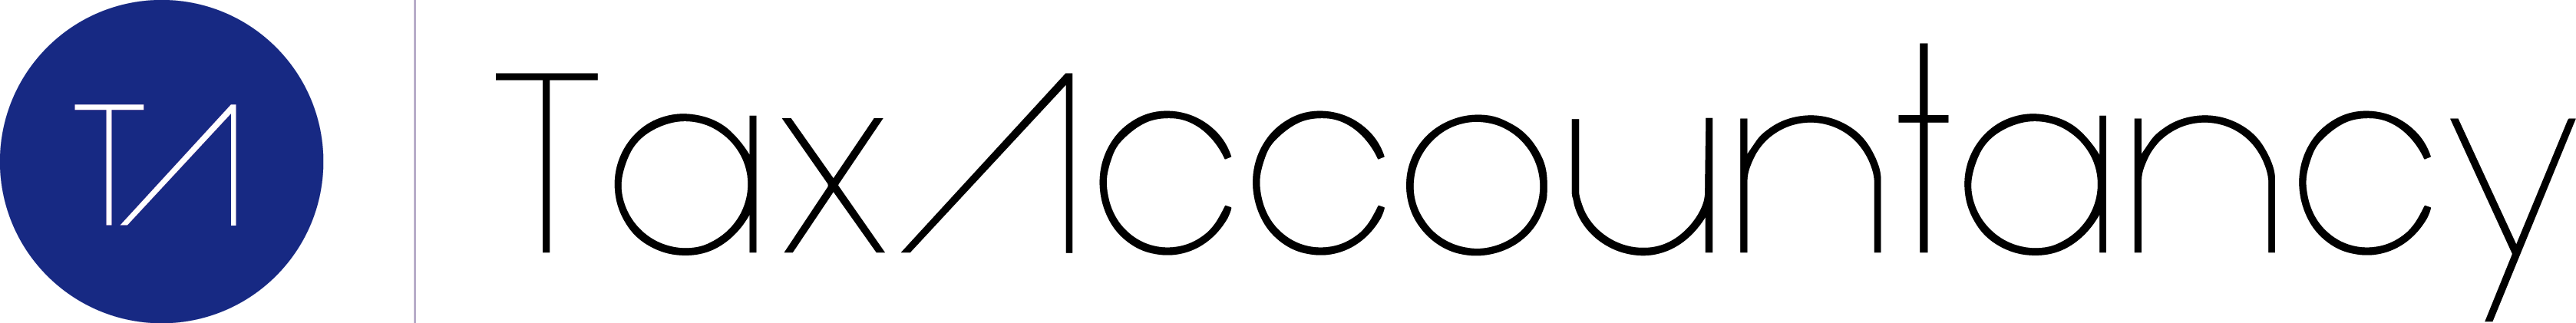 taxaccountancy_logo